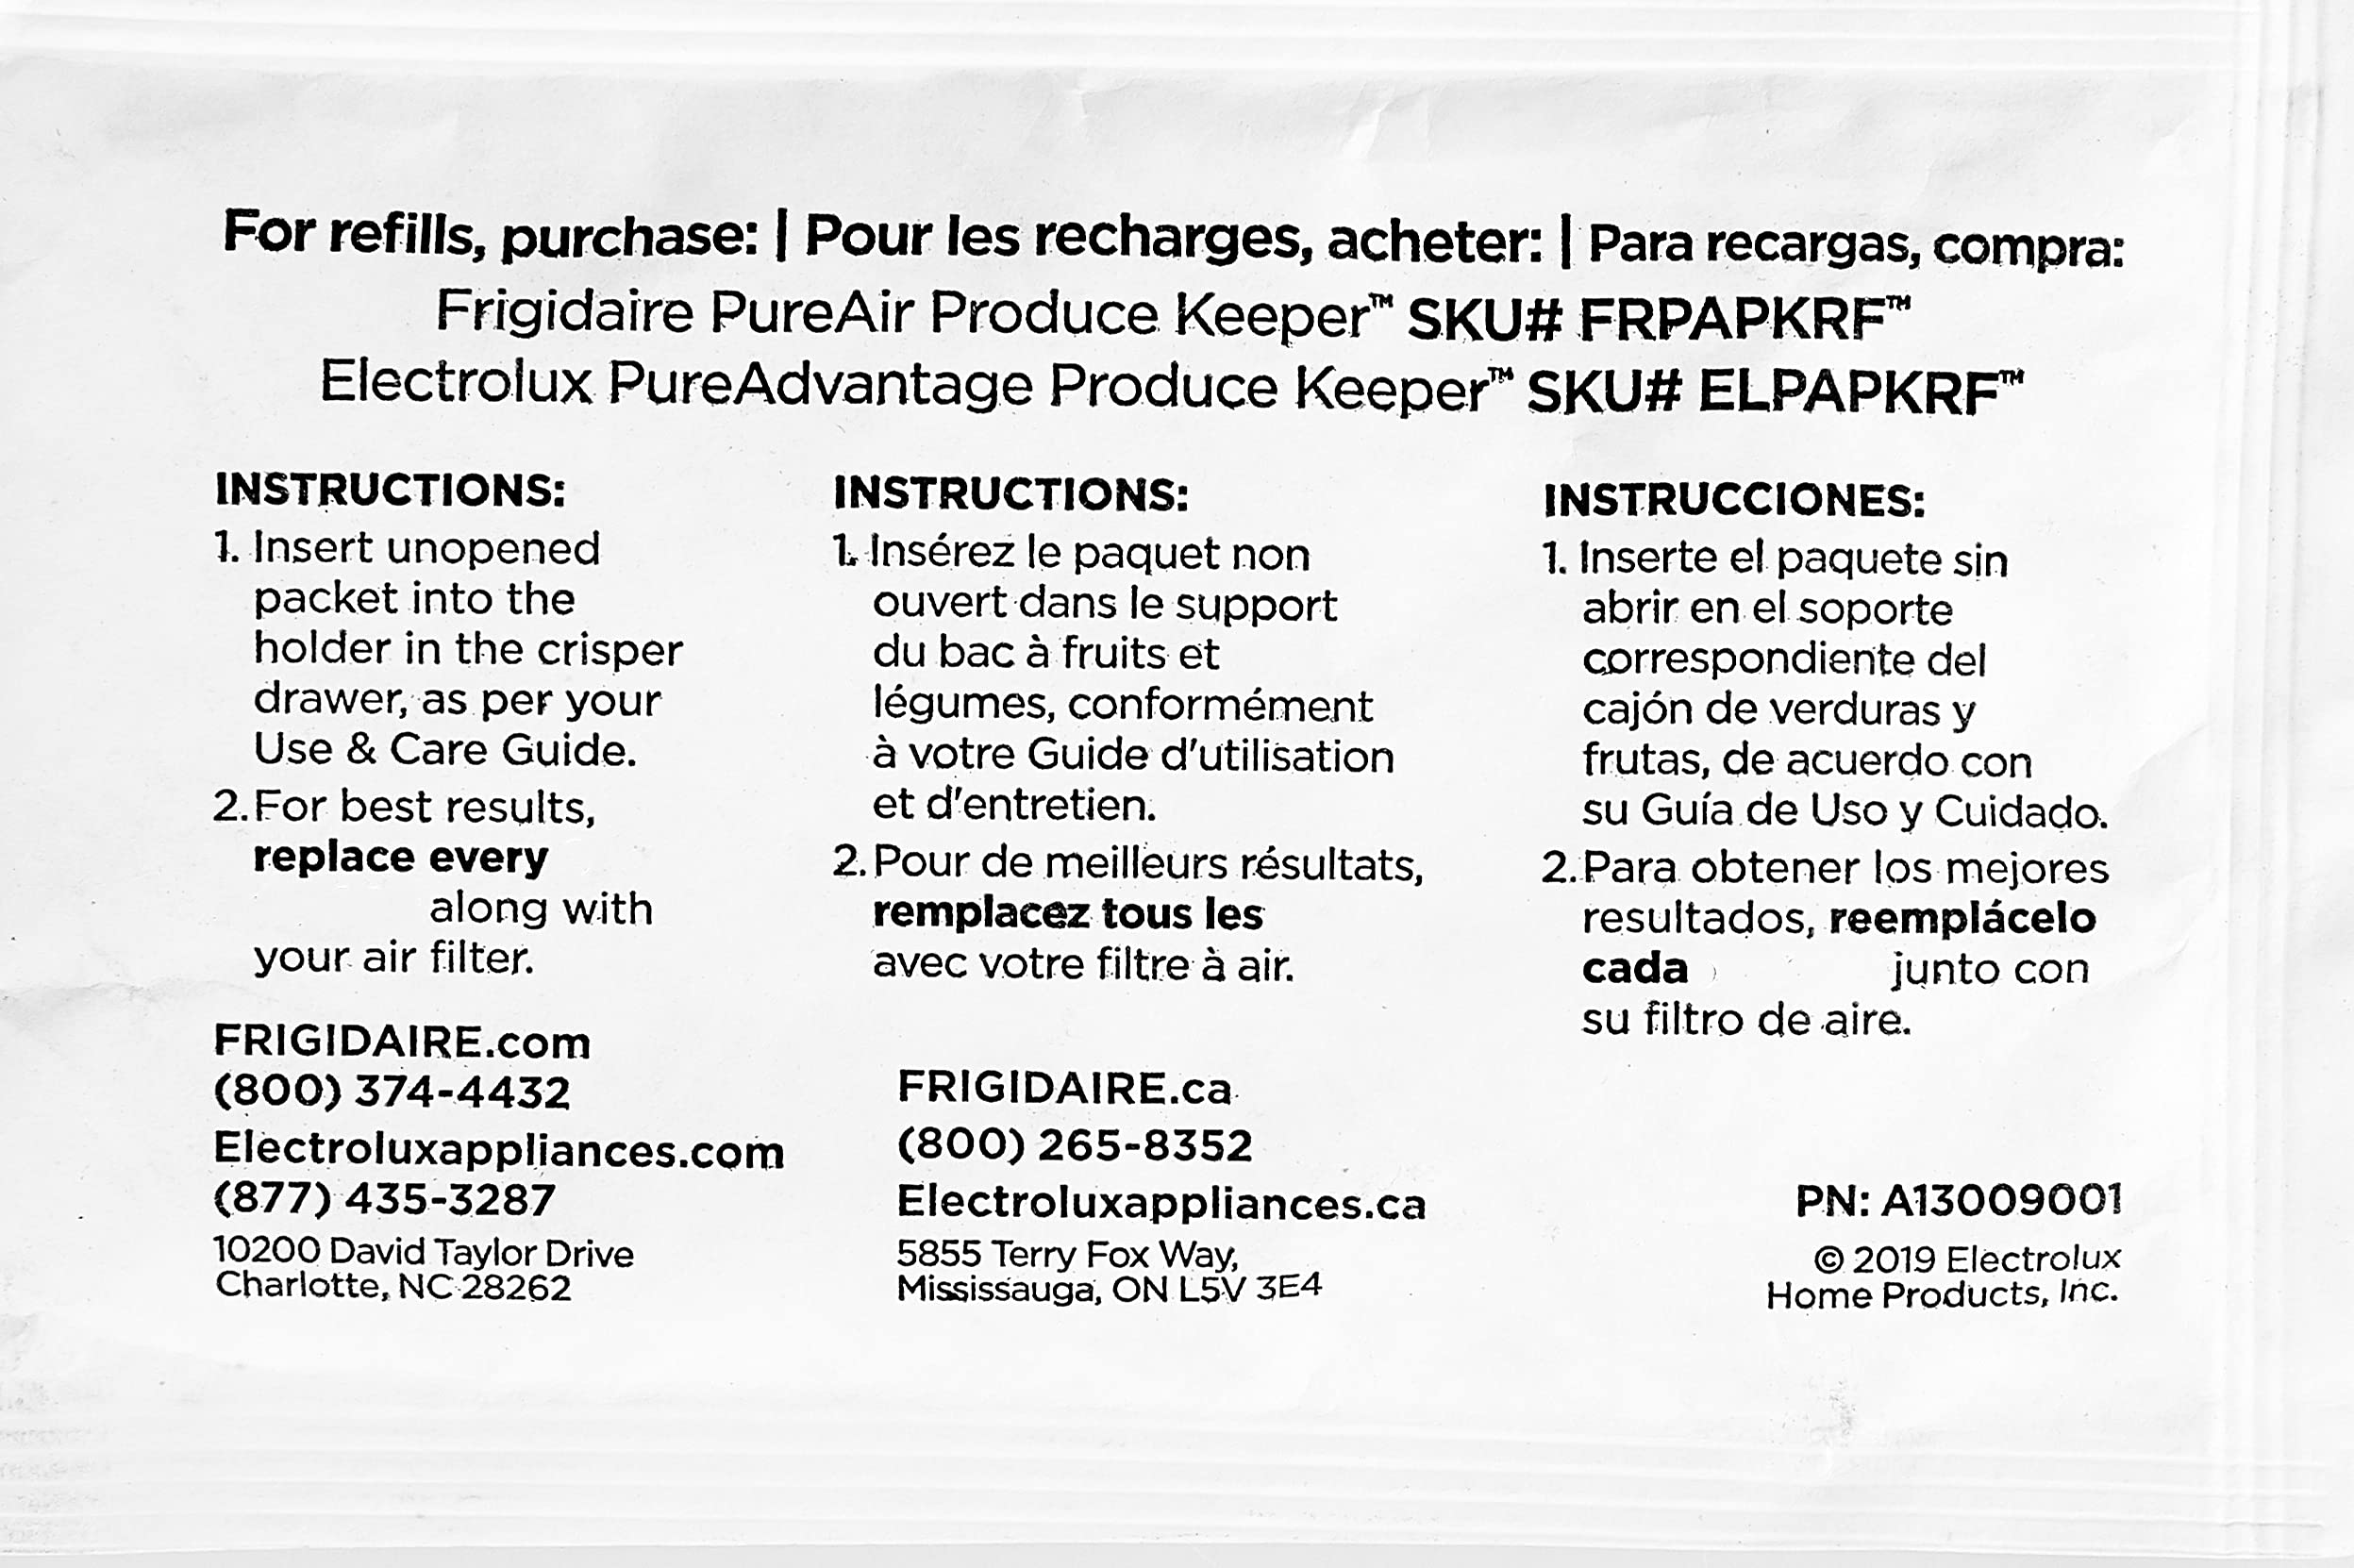 Frigidaire FRPFFVSYR PureFresh PK-1 Fruit and Veggie Saver Refill - 1 Year Pack